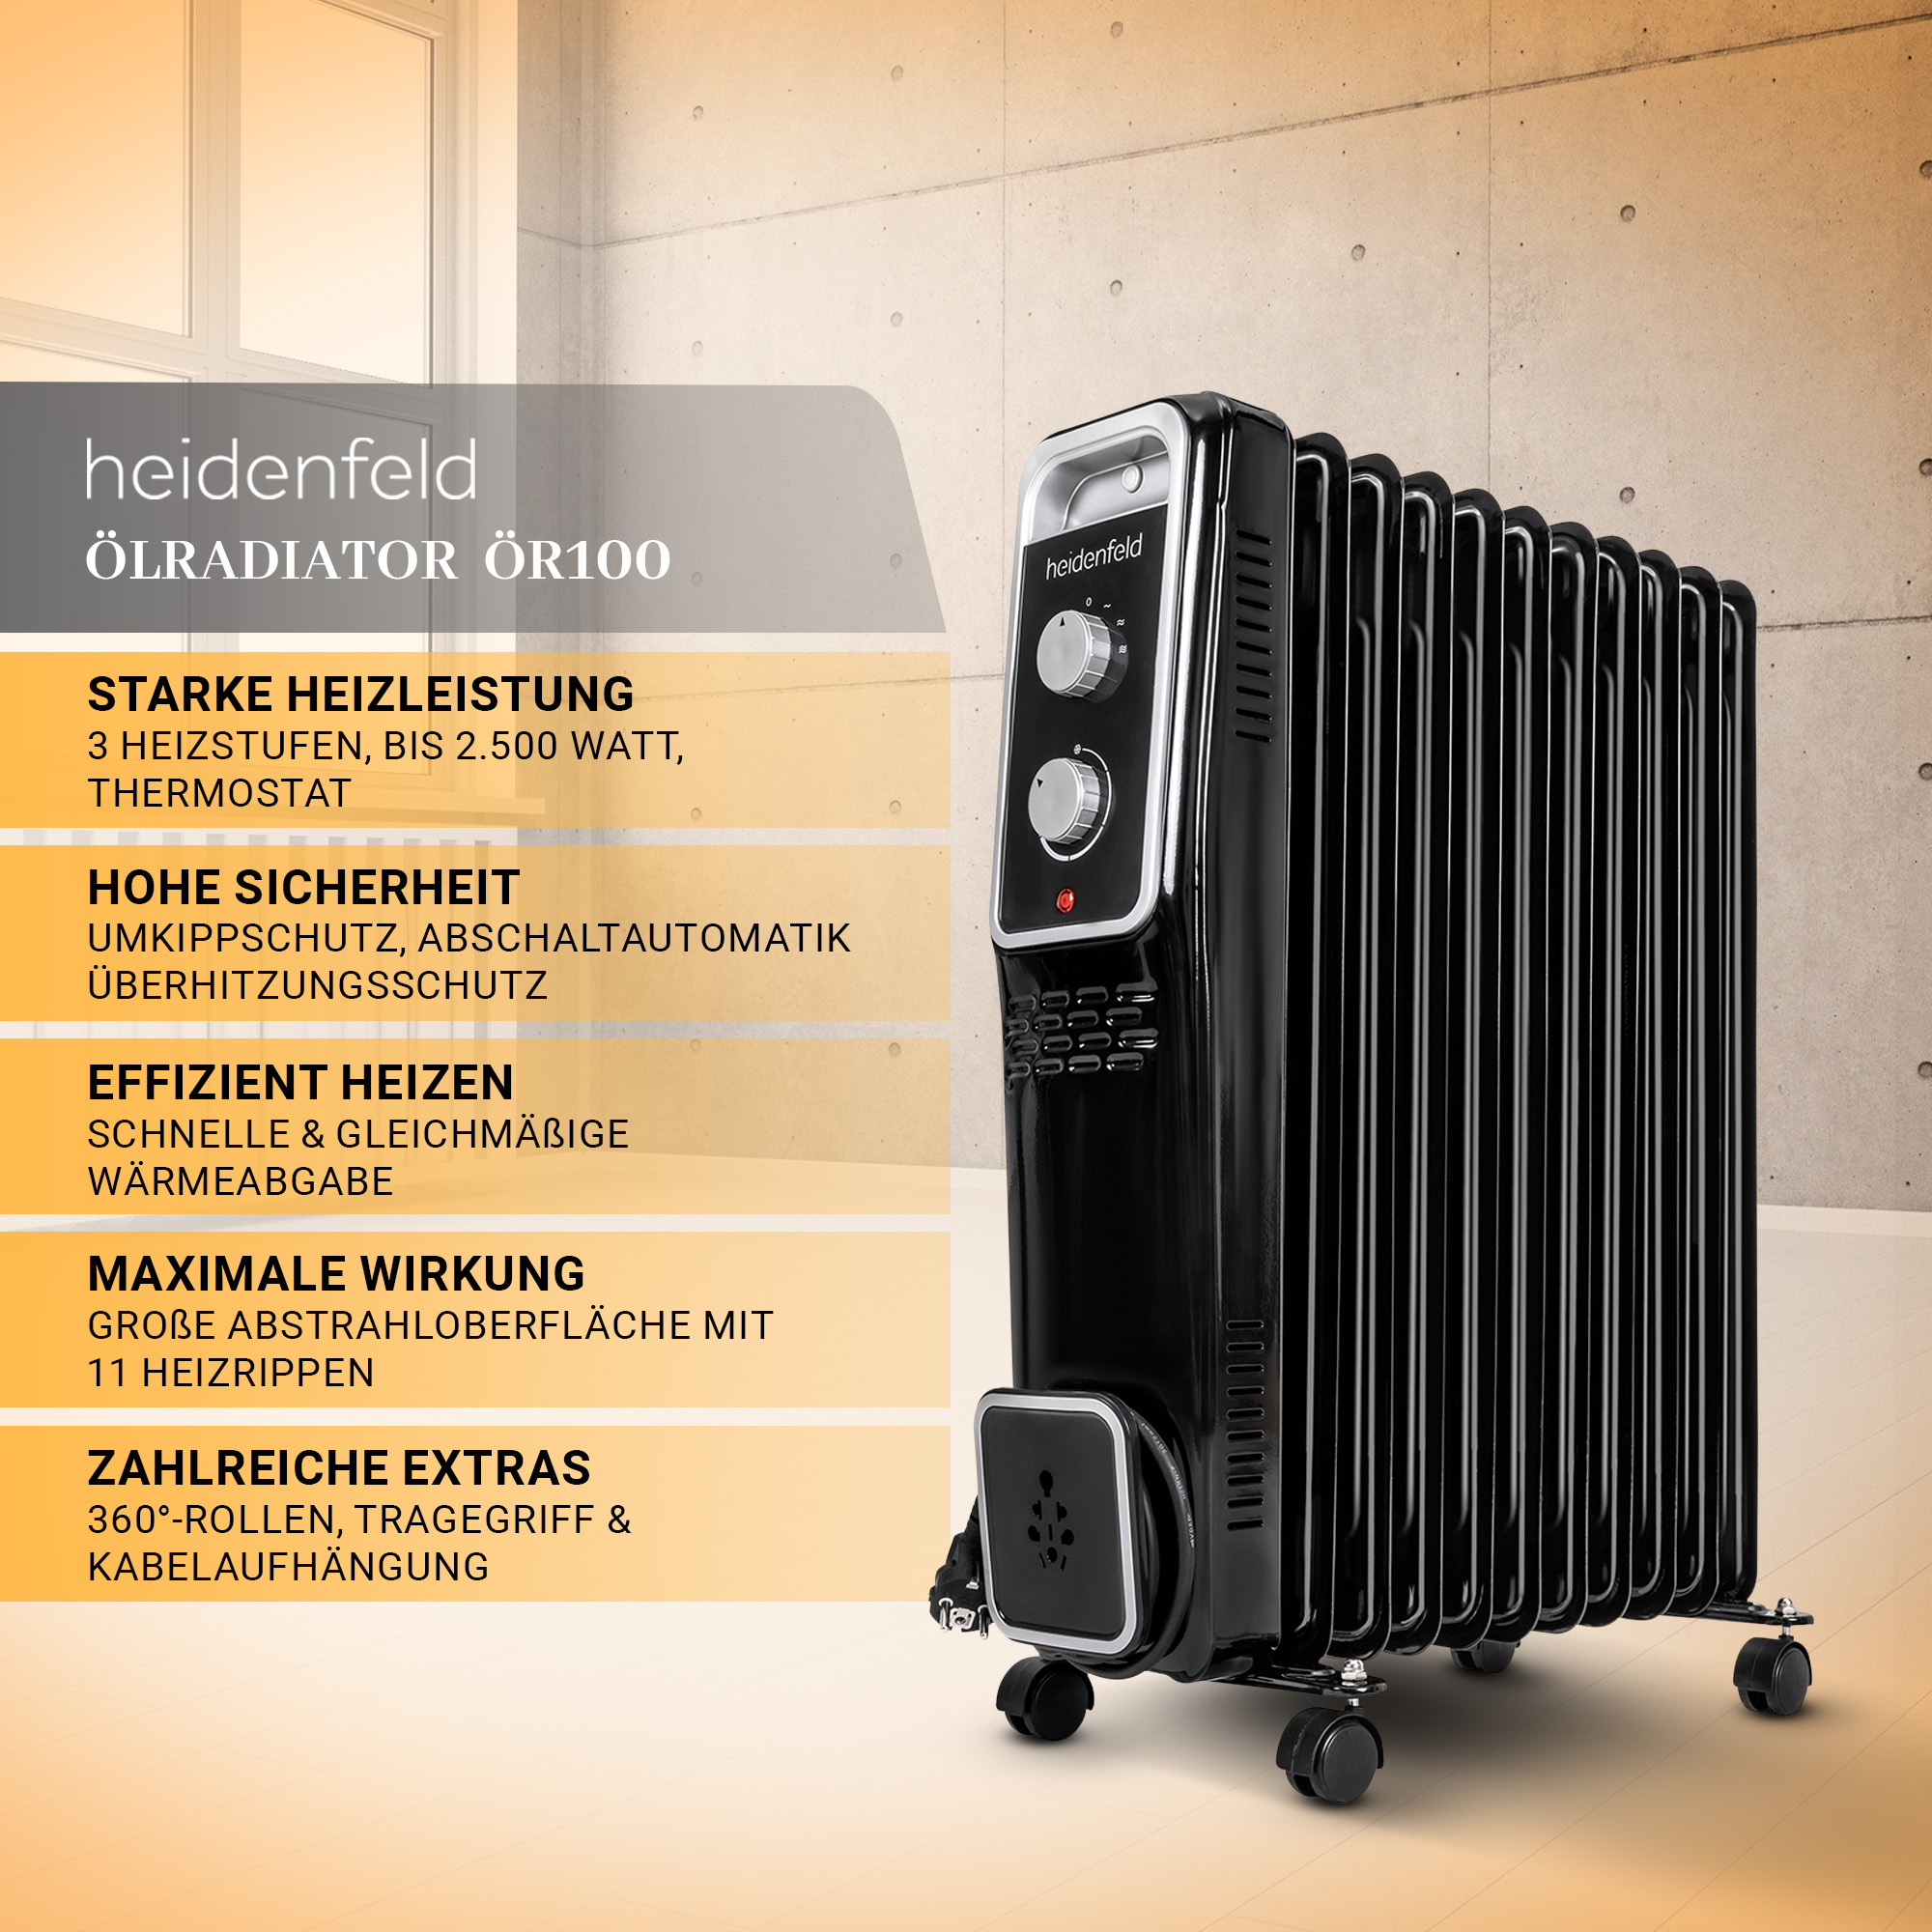 HEIDENFELD Heidenfeld Ölradiator ÖR100, Thermostat, stufenweise Watt) (2500 Watt, 1000-2500 Regulierung Ölradiator